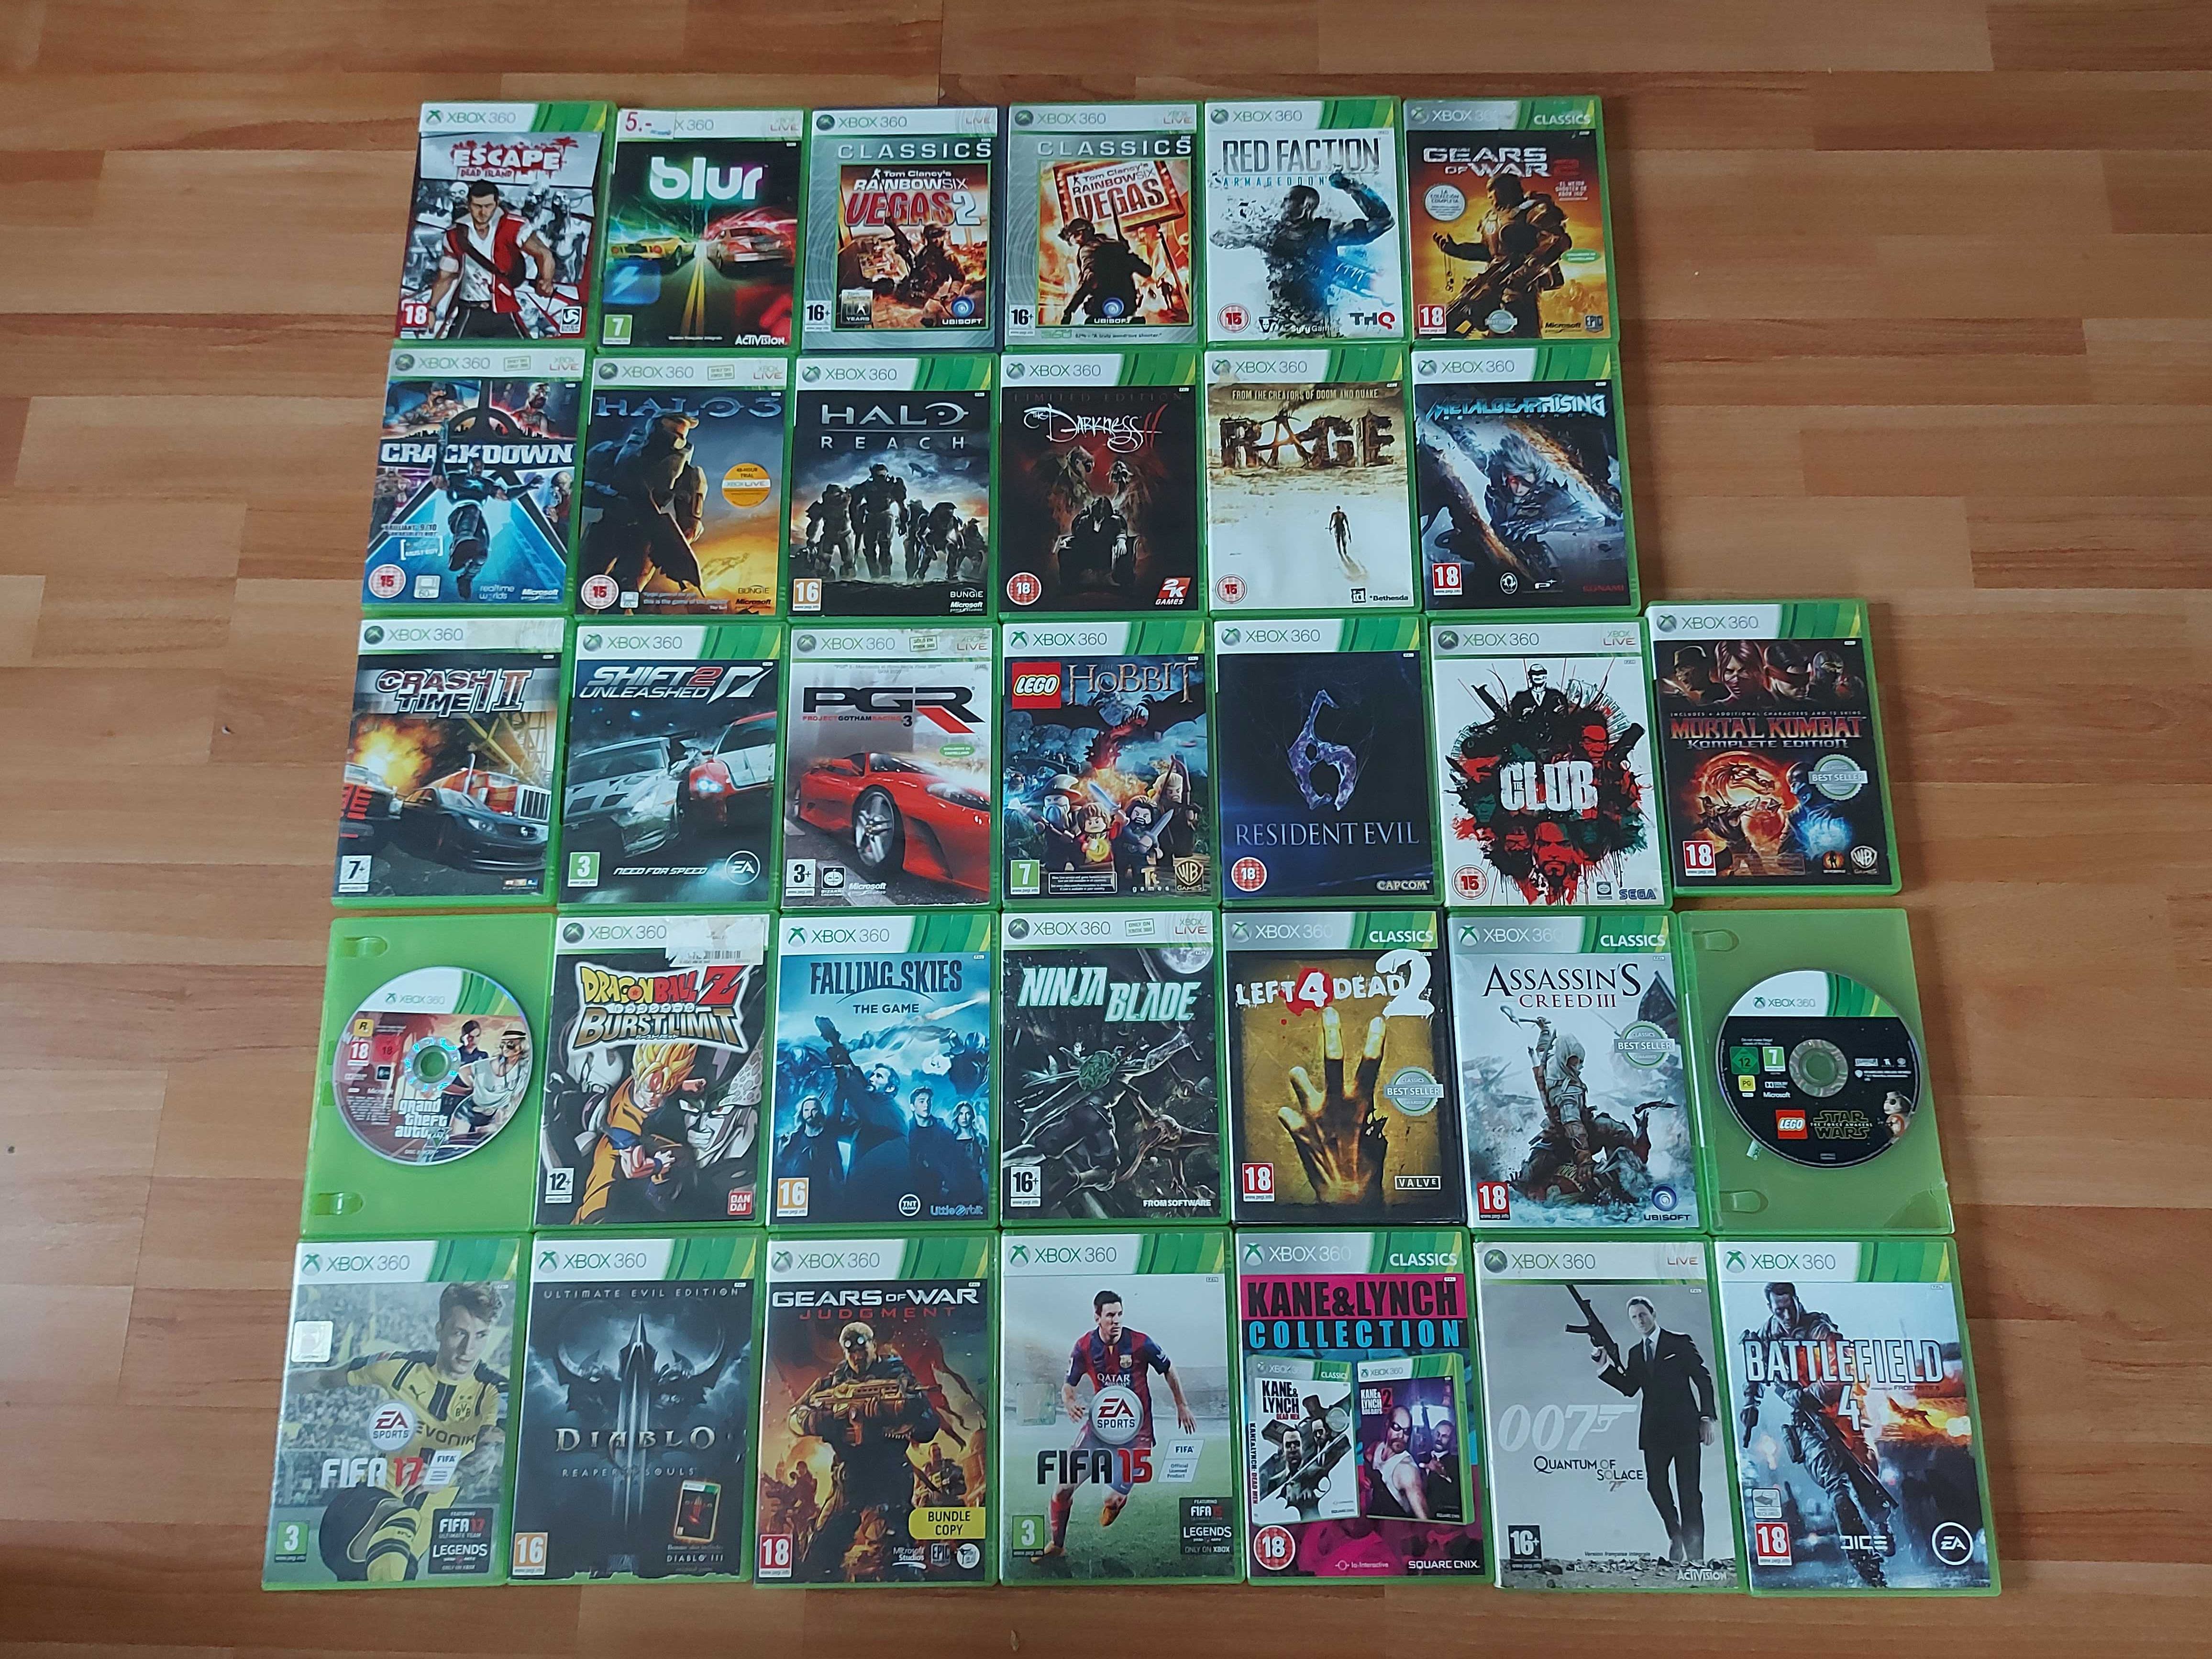 Oferta Jocuri Xbox One - Fifa 22,MK 11,NFS, The crew, Forza Motosport